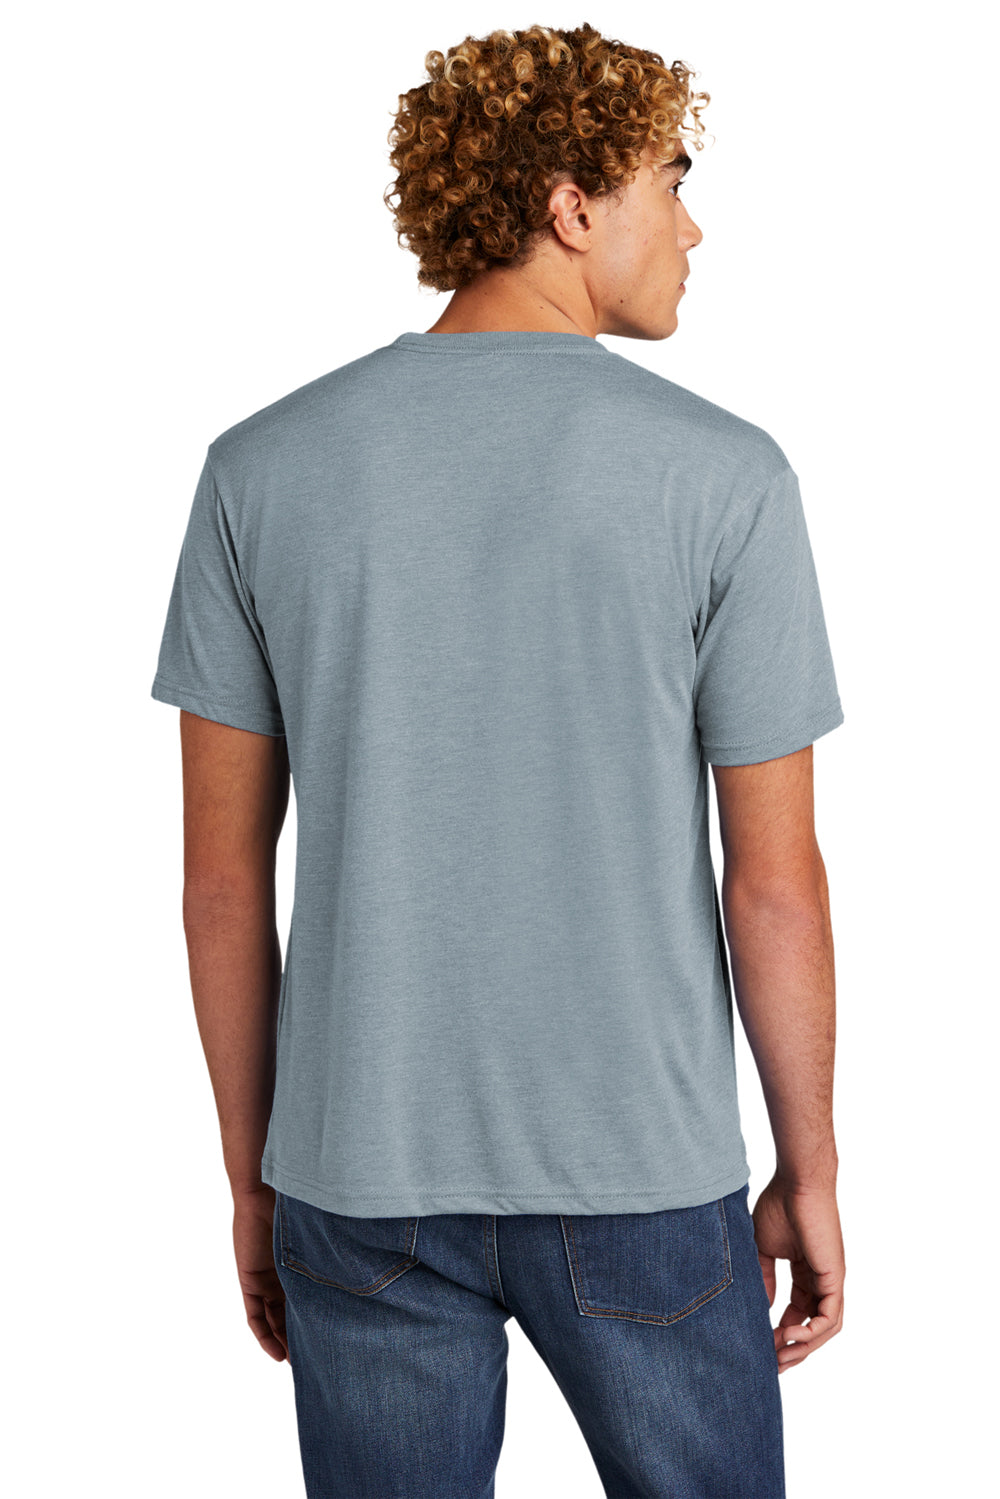 Next Level NL6010/6010 Mens Jersey Short Sleeve Crewneck T-Shirt Stonewash Denim Blue Back